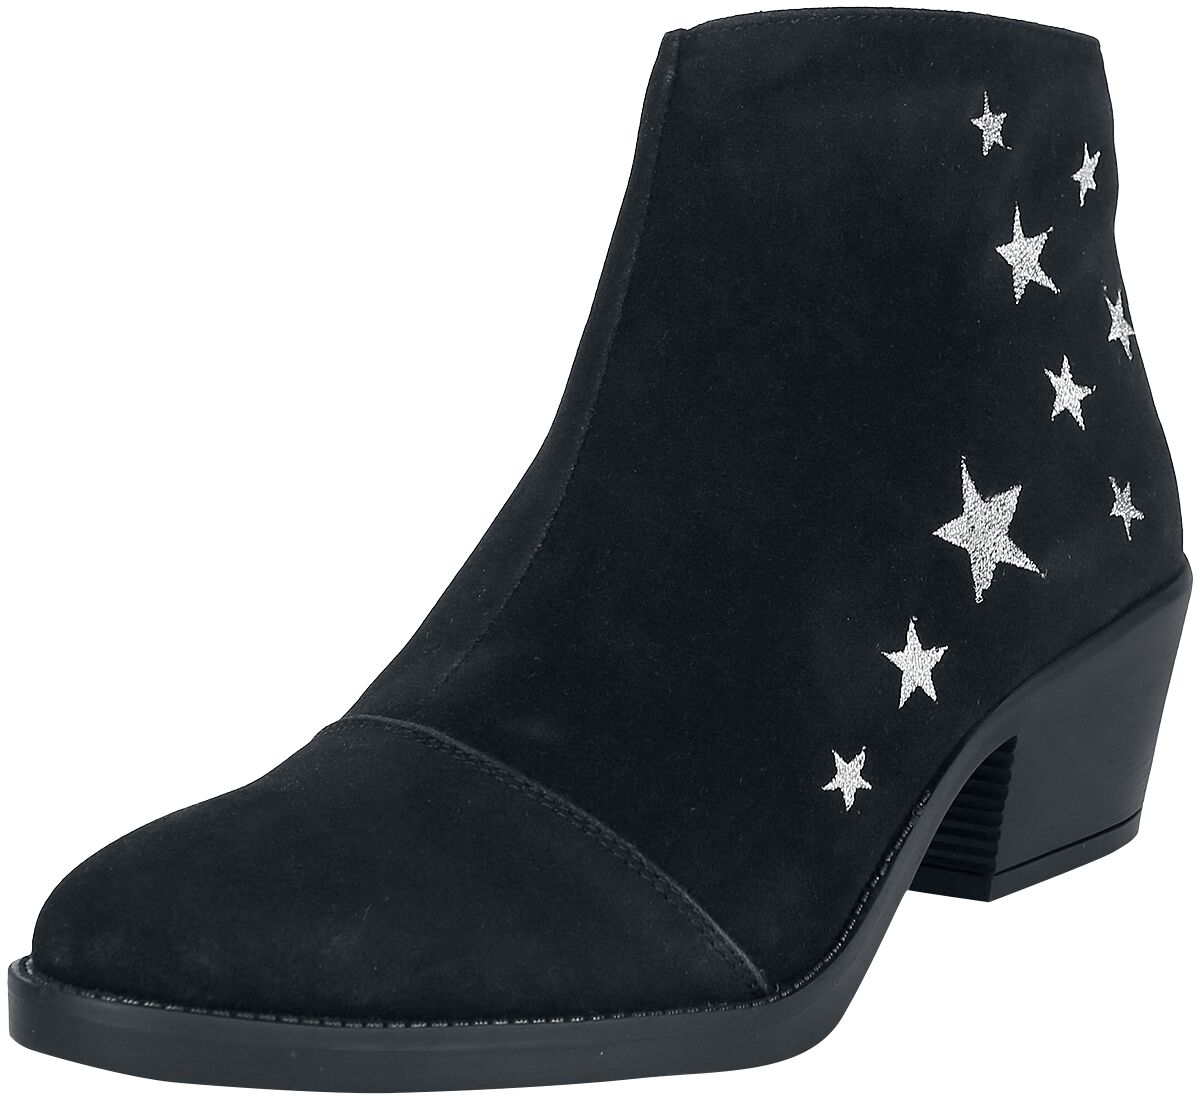 Image of Stivali di RED by EMP - Suede boots with stars - EU37 a EU41 - Donna - nero